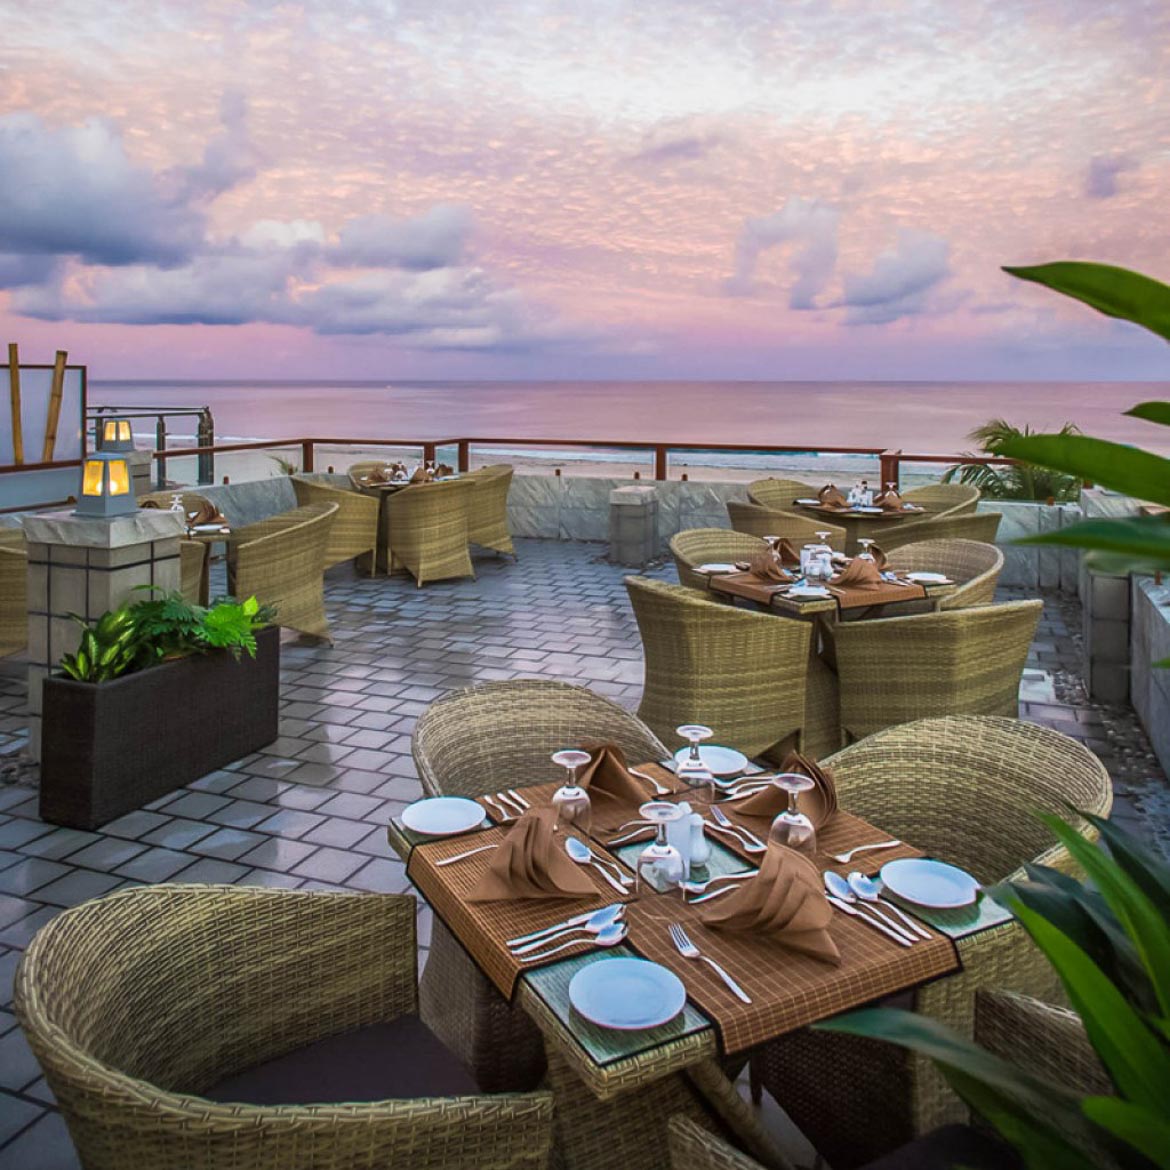 Maldives Travel Layover - O'View restaurant